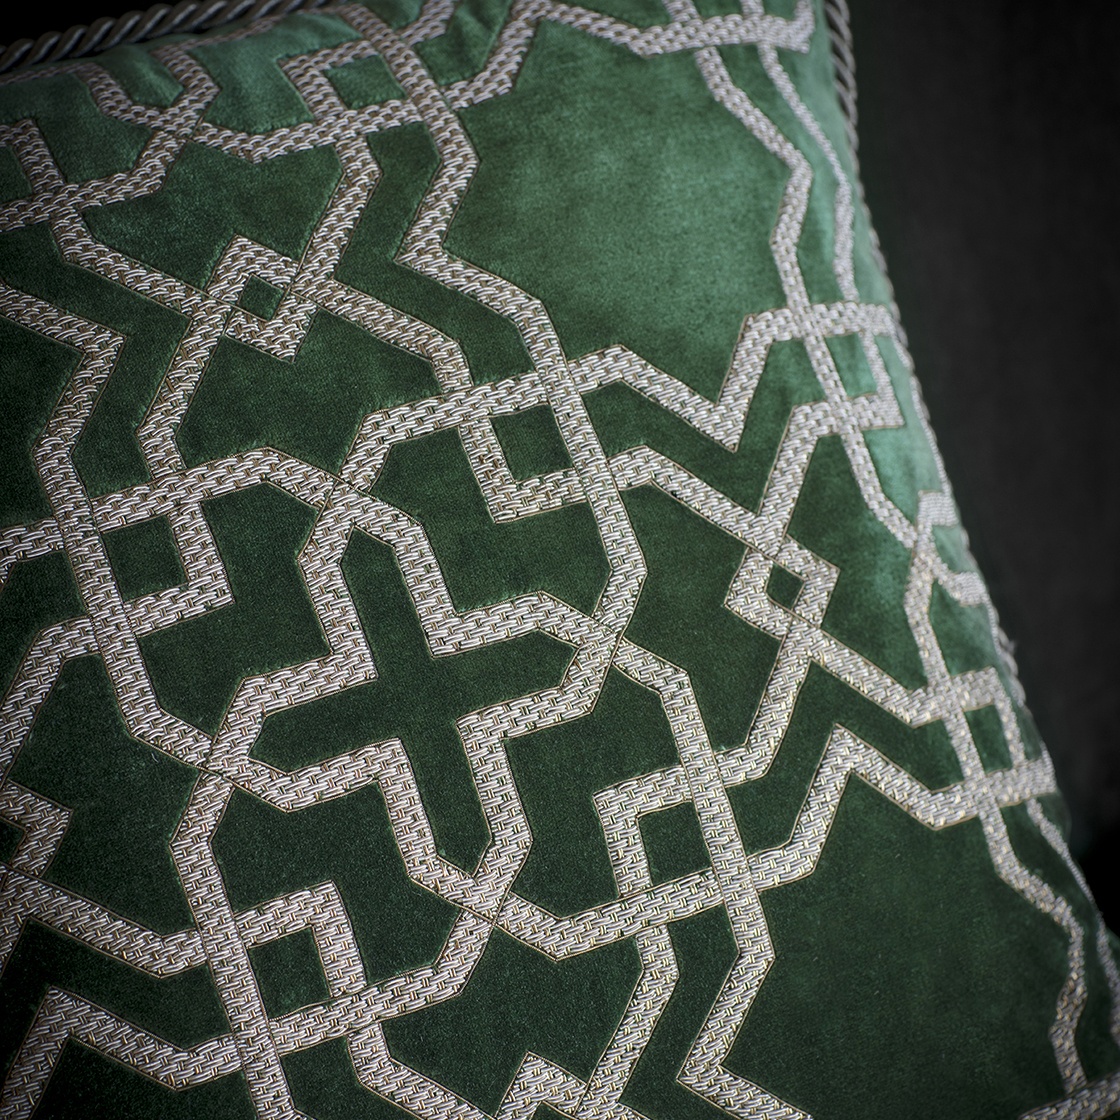 Habibi Cushion in Capri silk velvet - Emerald